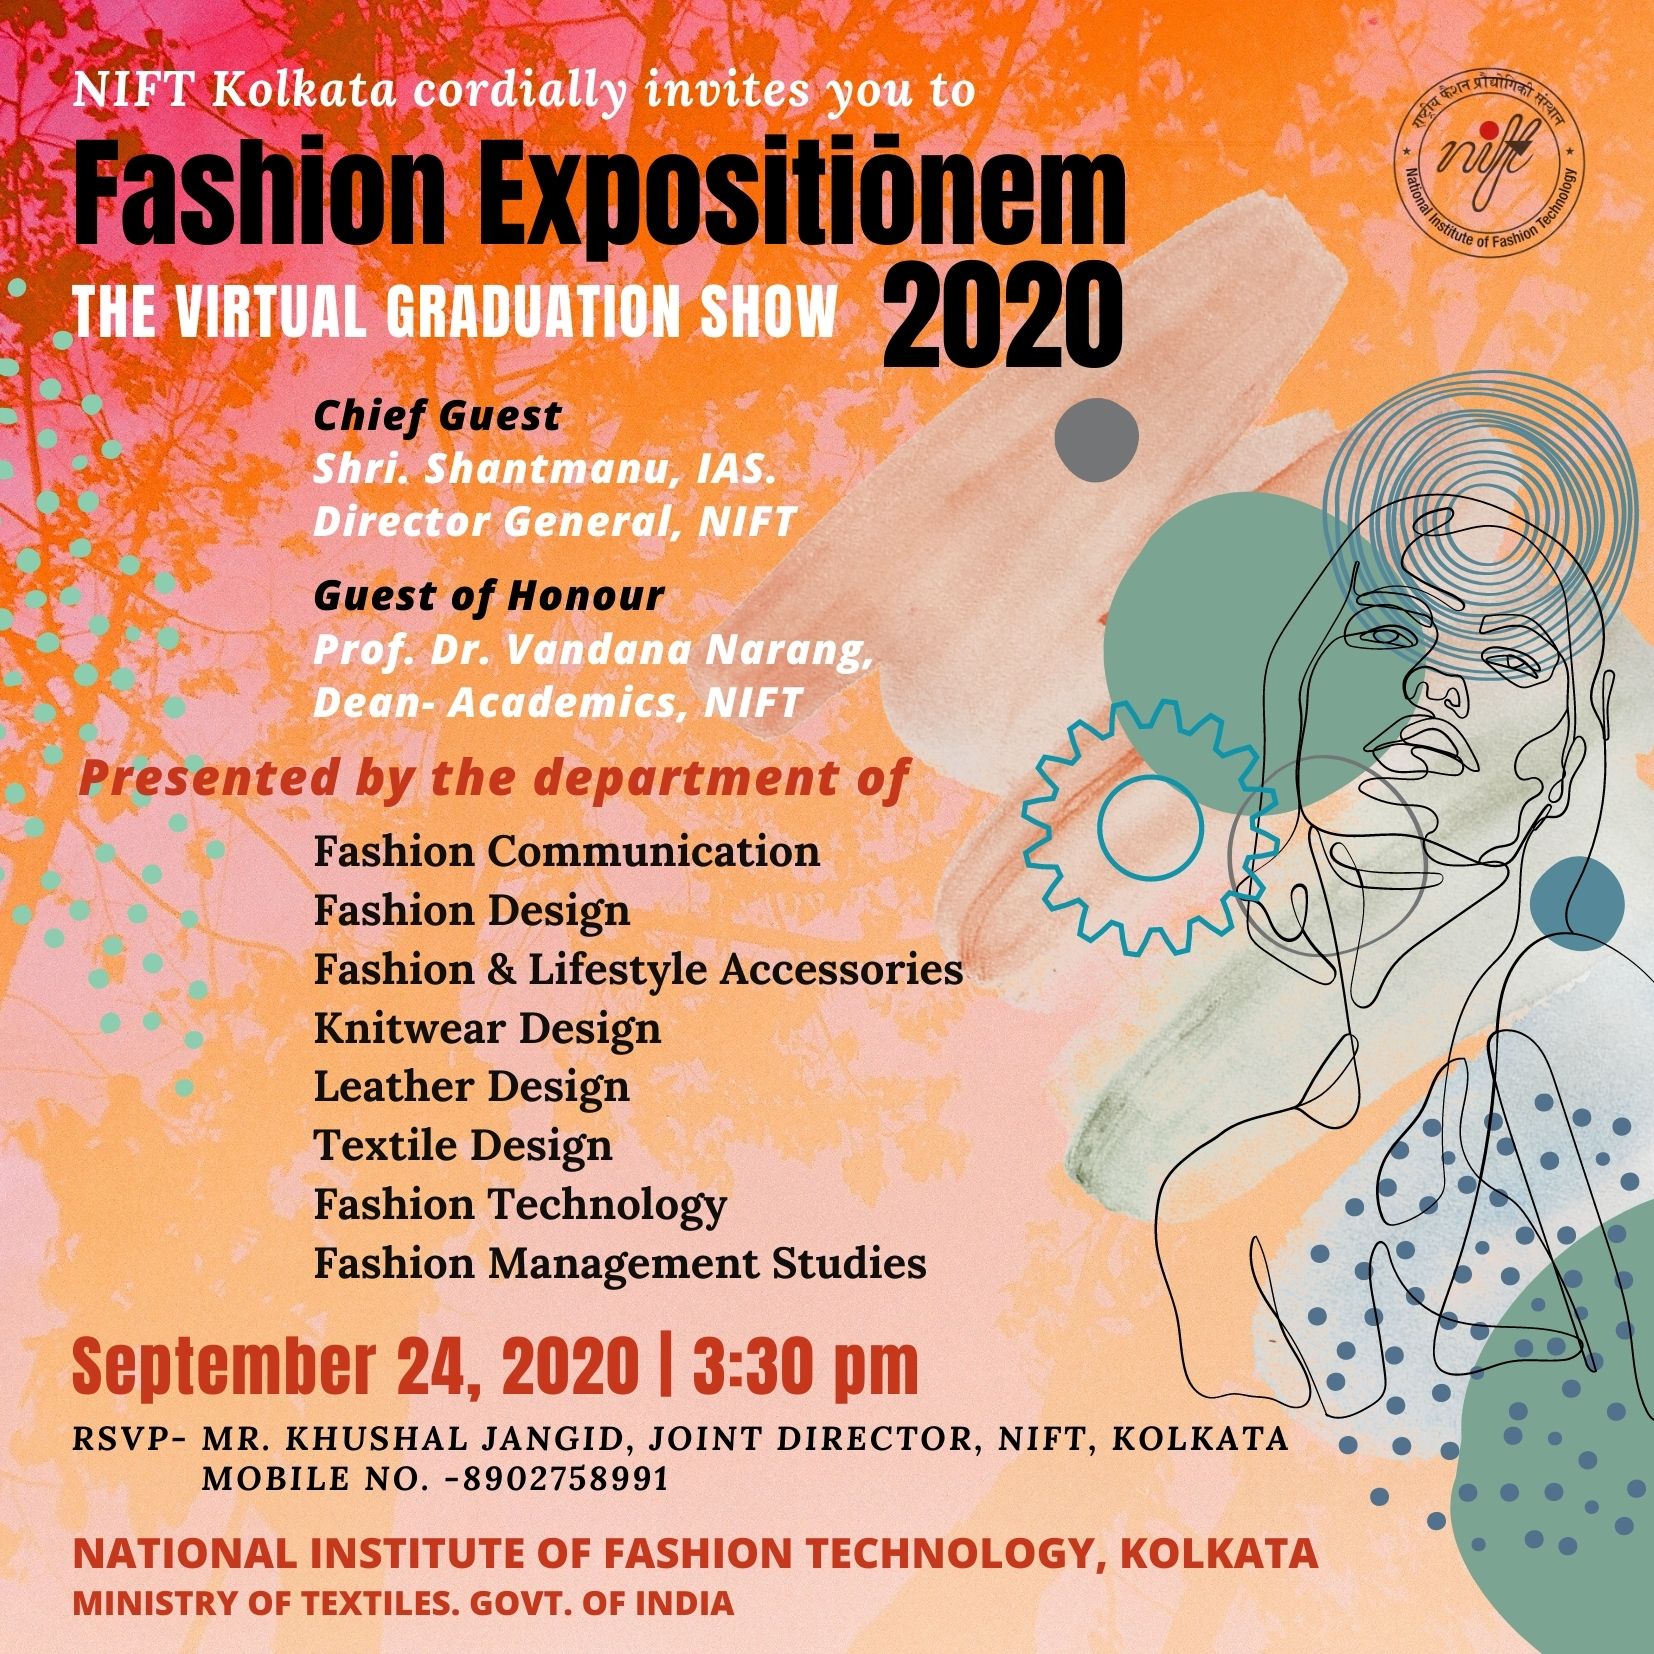 Fashion Expositionem 2020